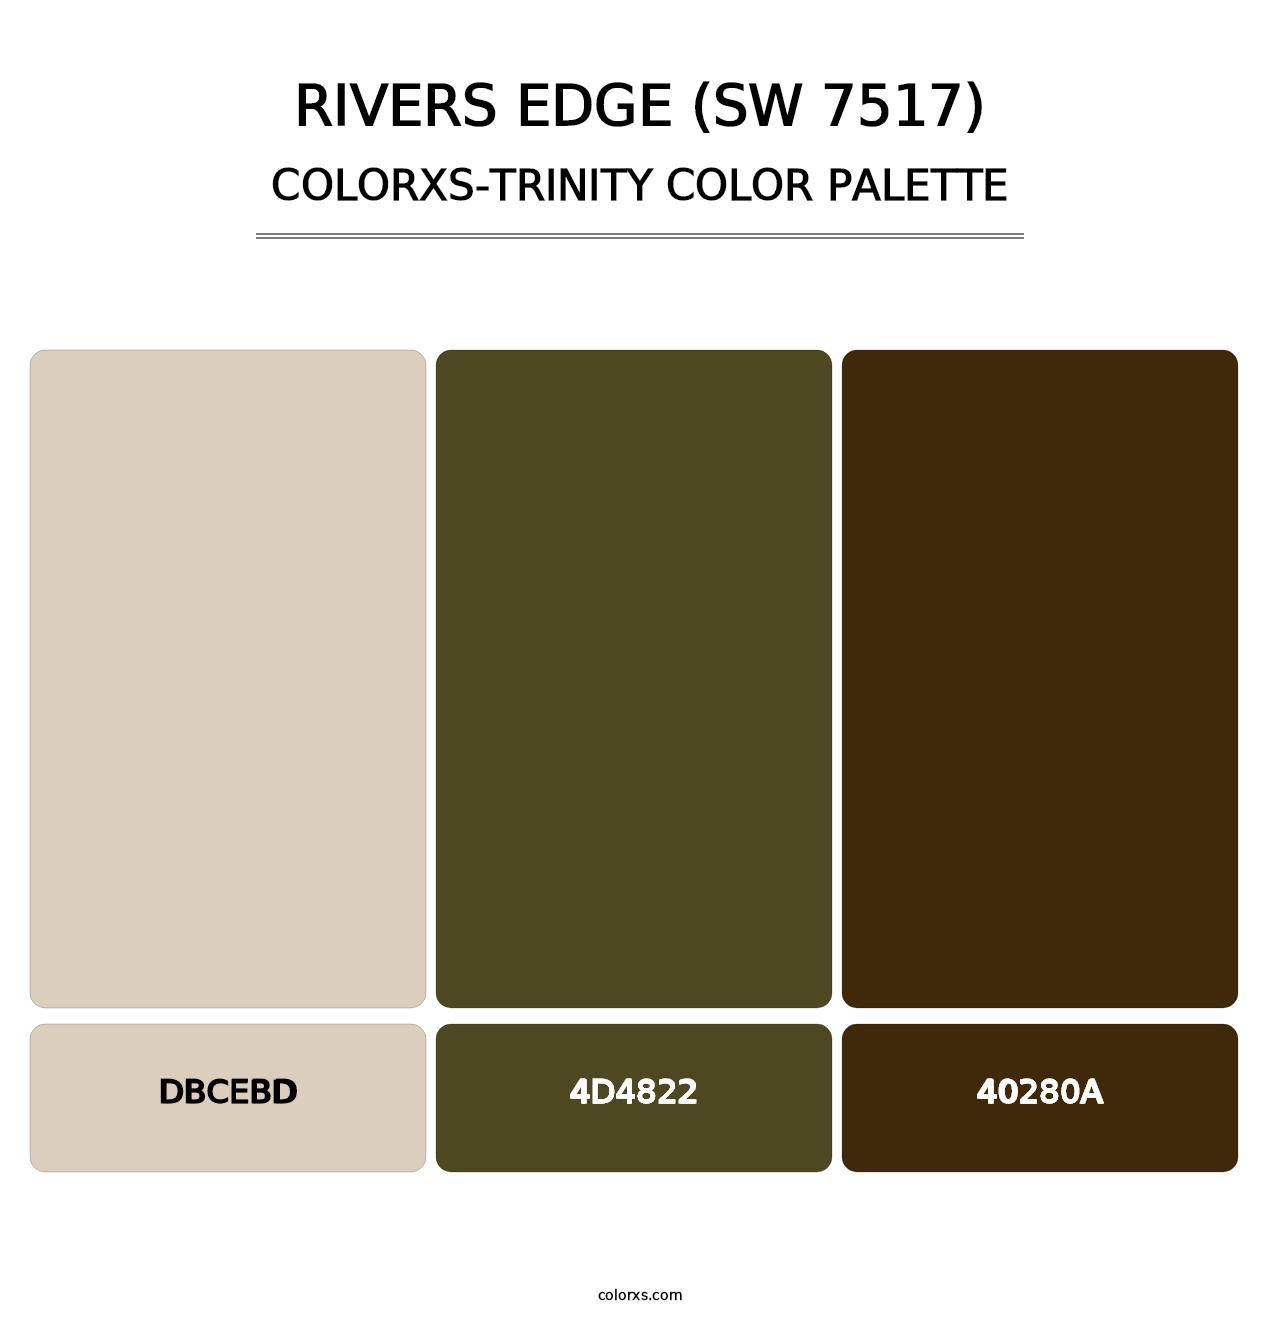 Rivers Edge (SW 7517) - Colorxs Trinity Palette